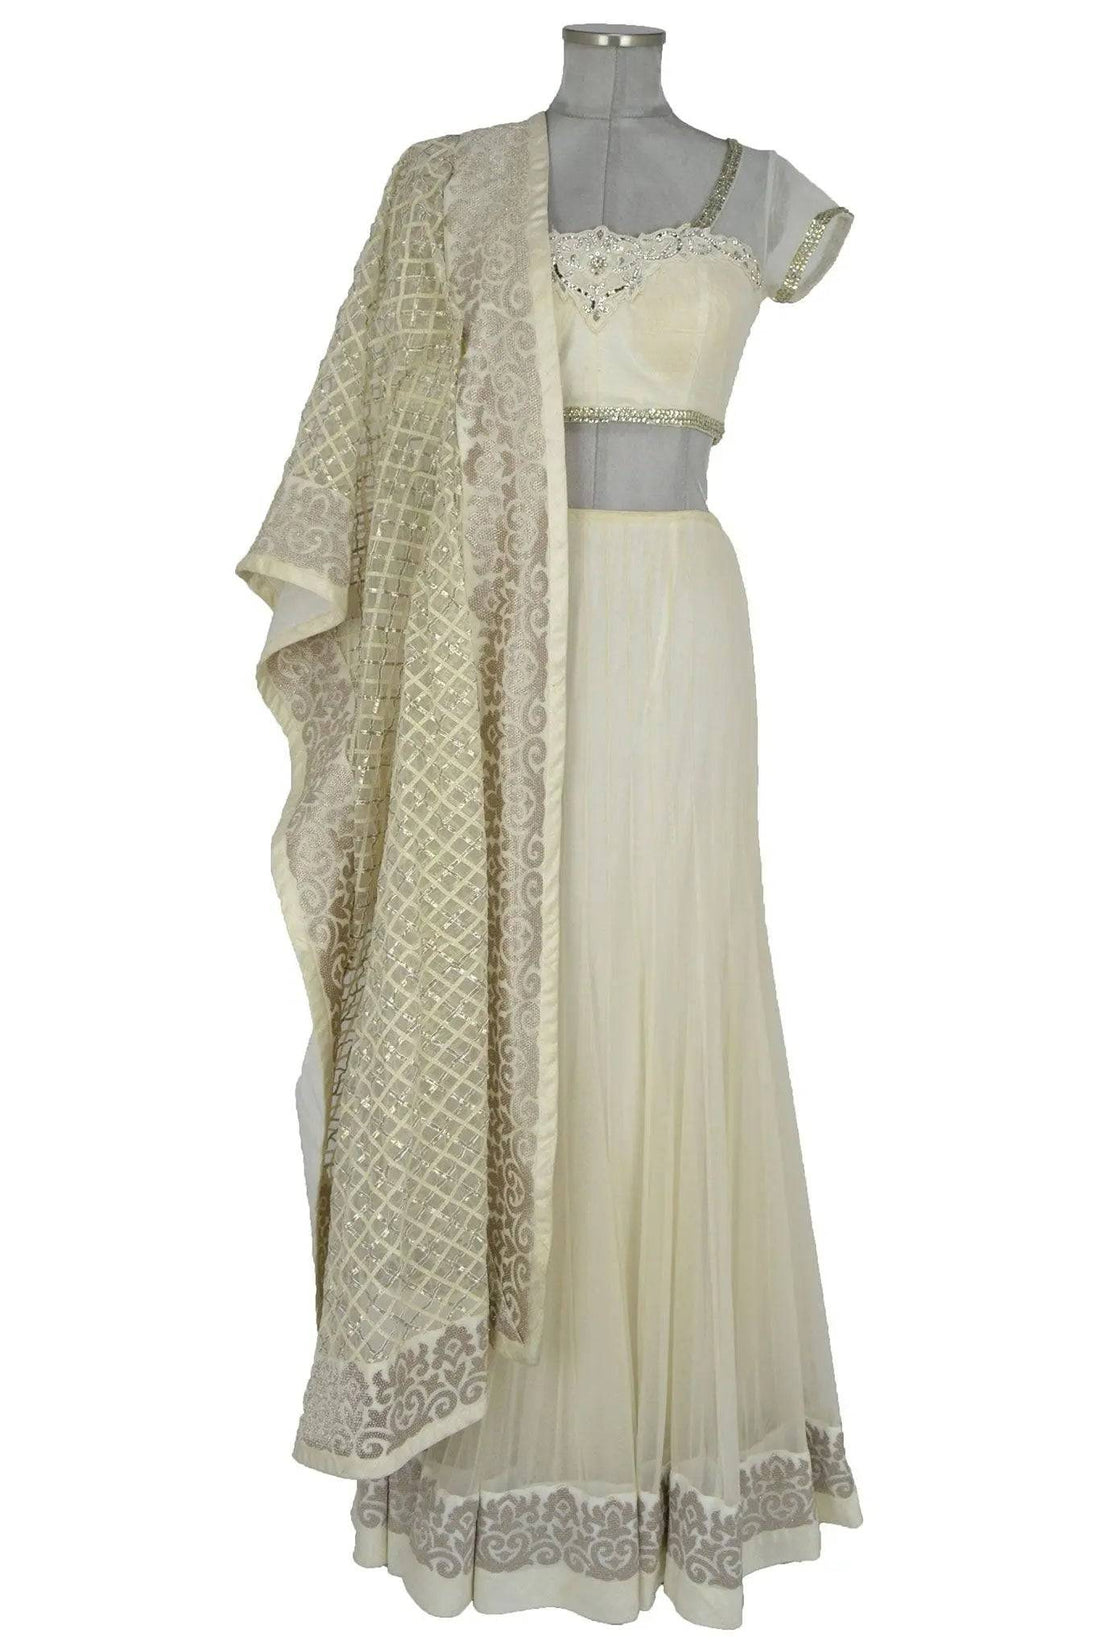 Noleggio raffinato abito donna stile Orientale - Sari per Cerimonie